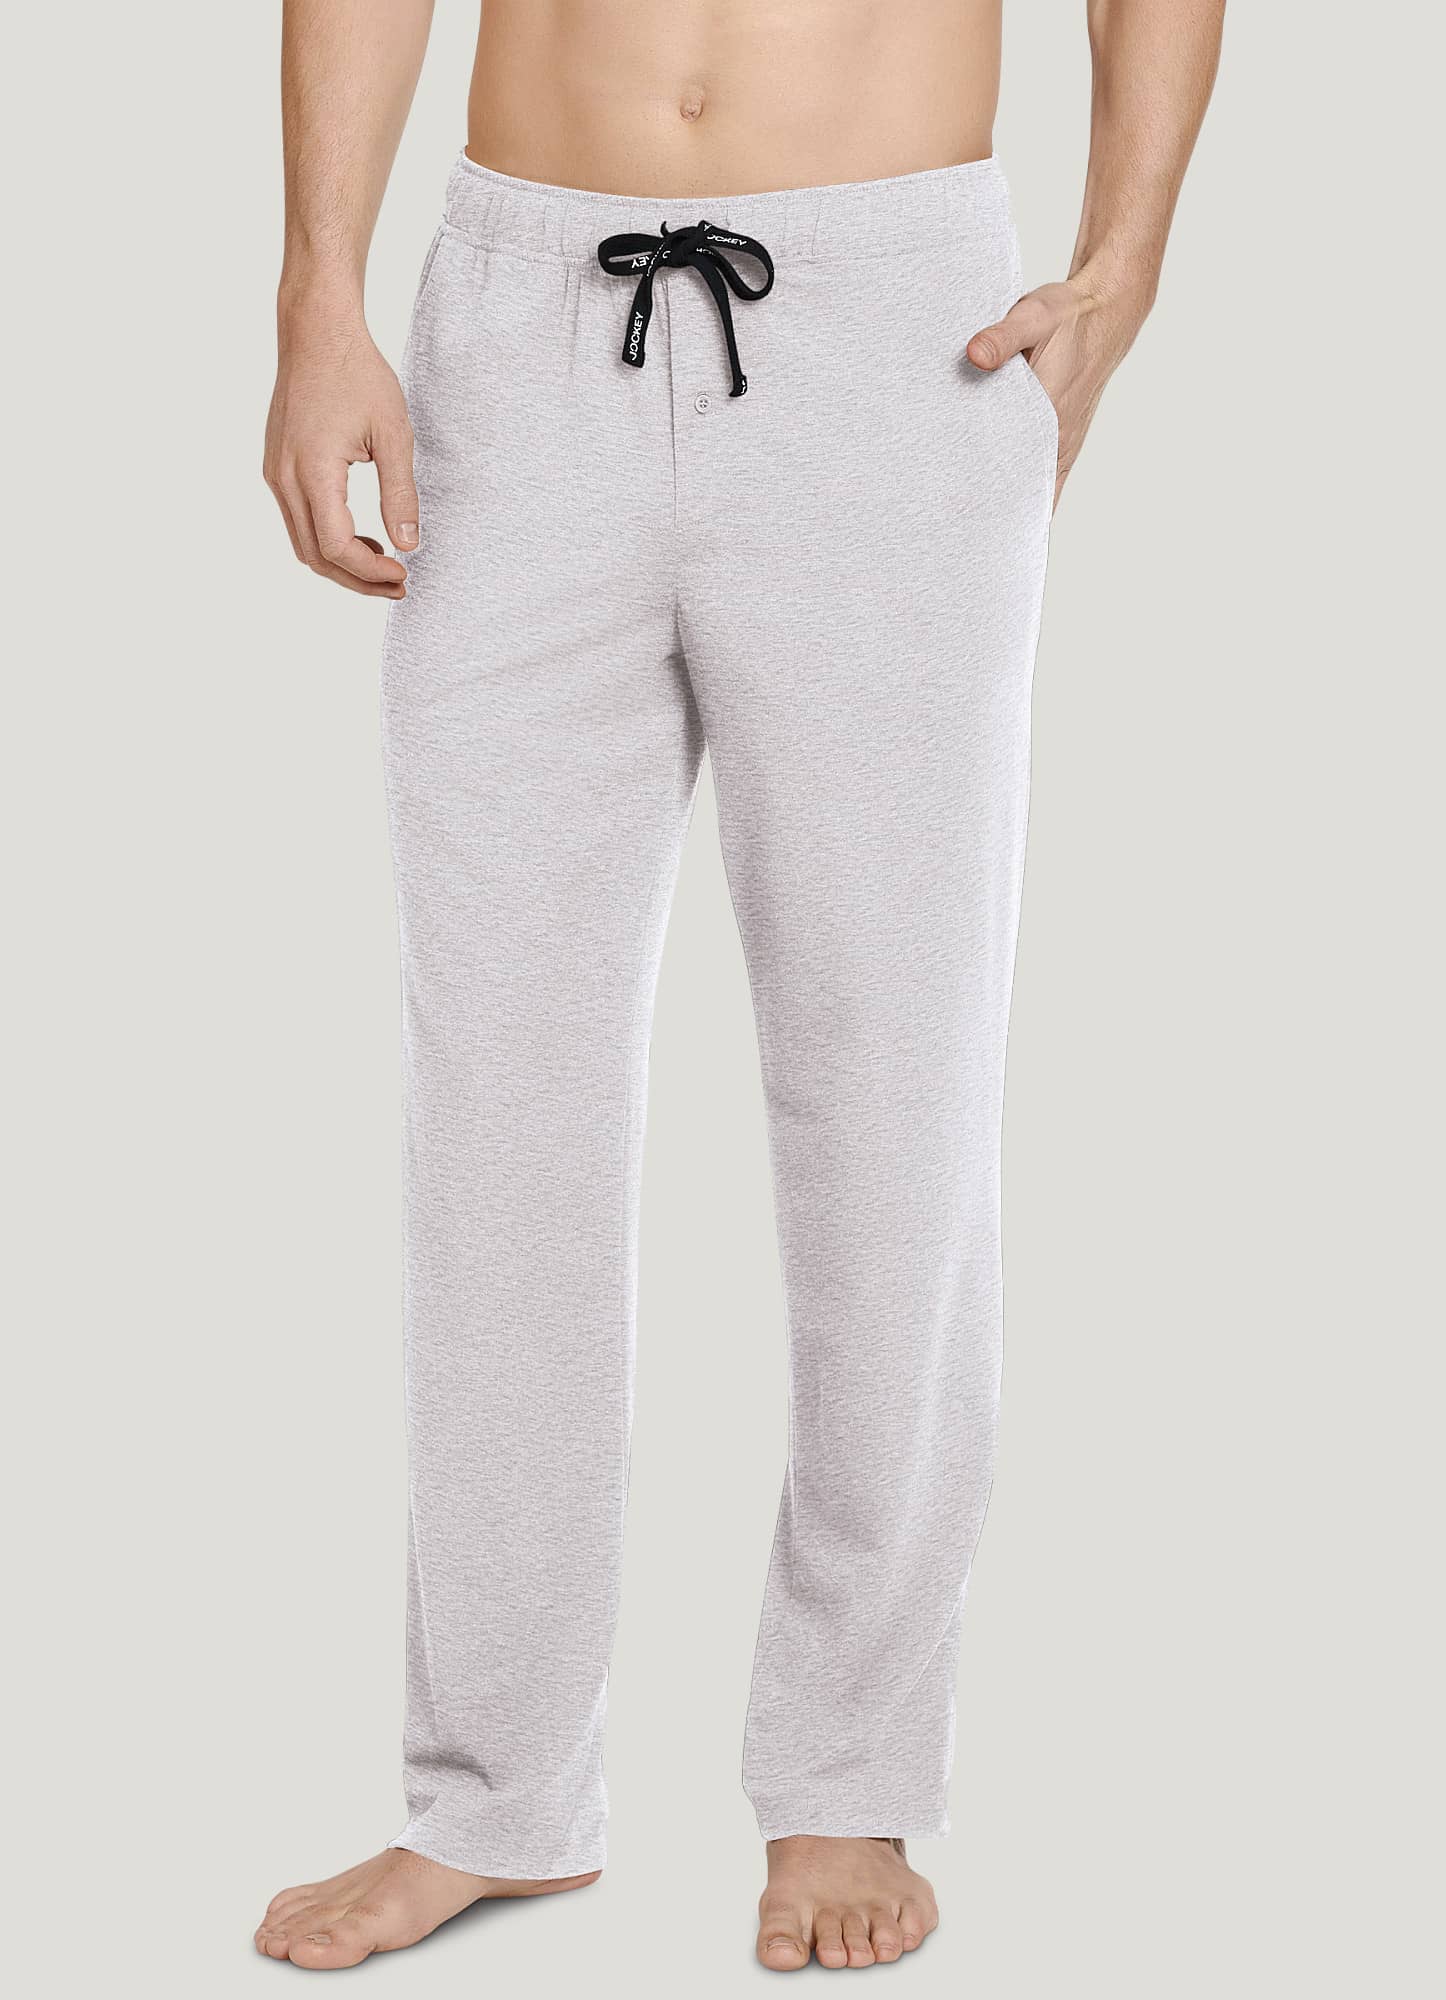 32/34/36 Long Inseam Women's Tall Extra Long Pajama Pants Lounge